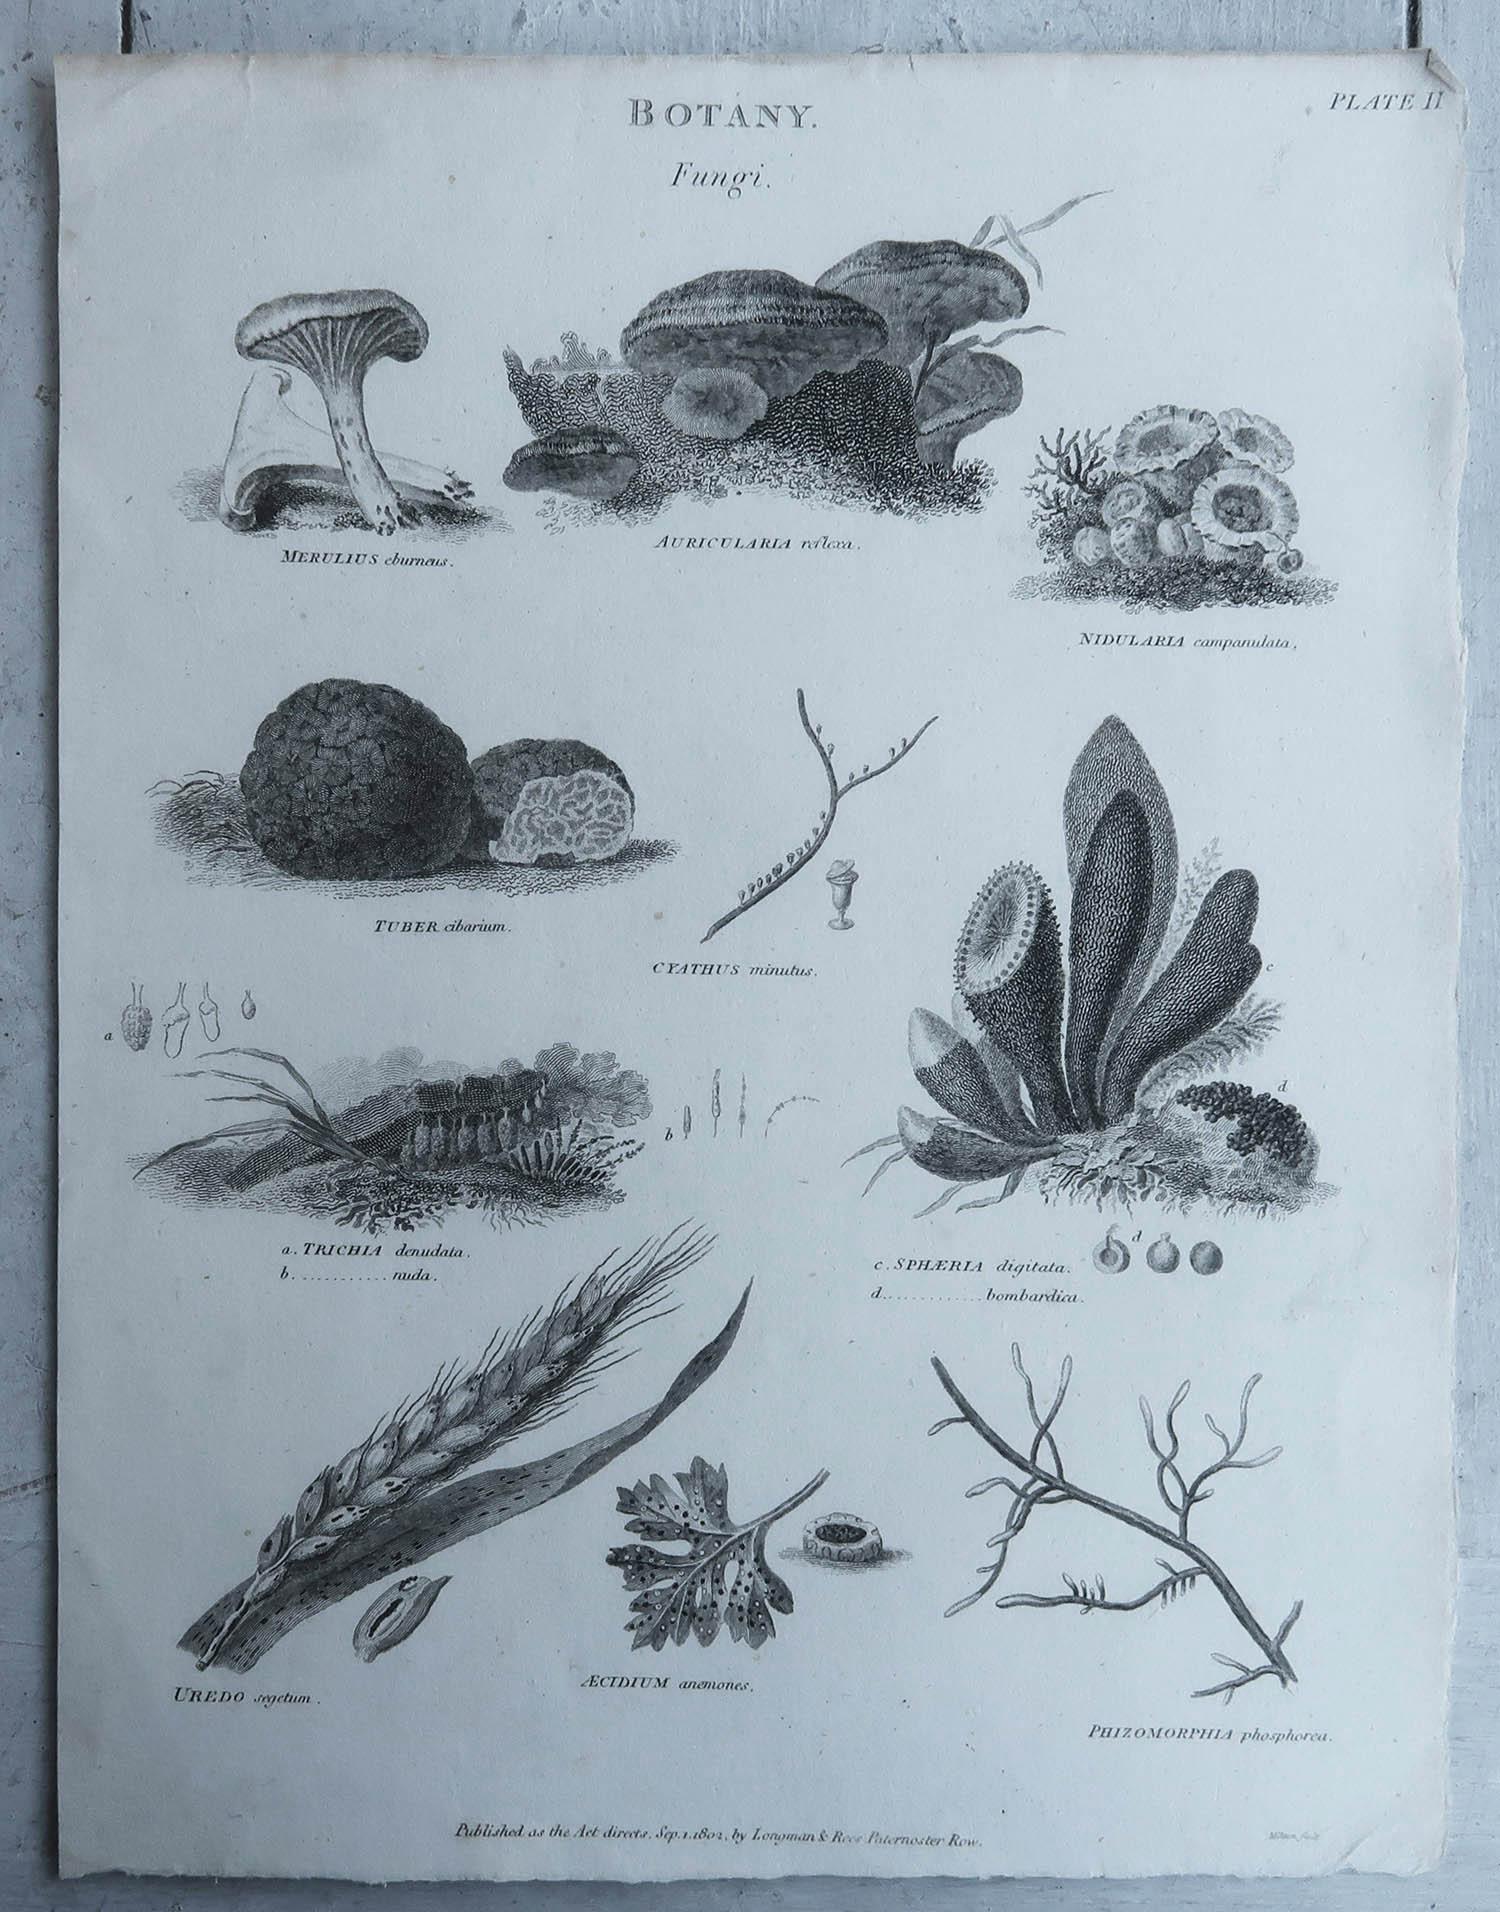 English Original Antique Print of Fungi, Dated 1802 For Sale